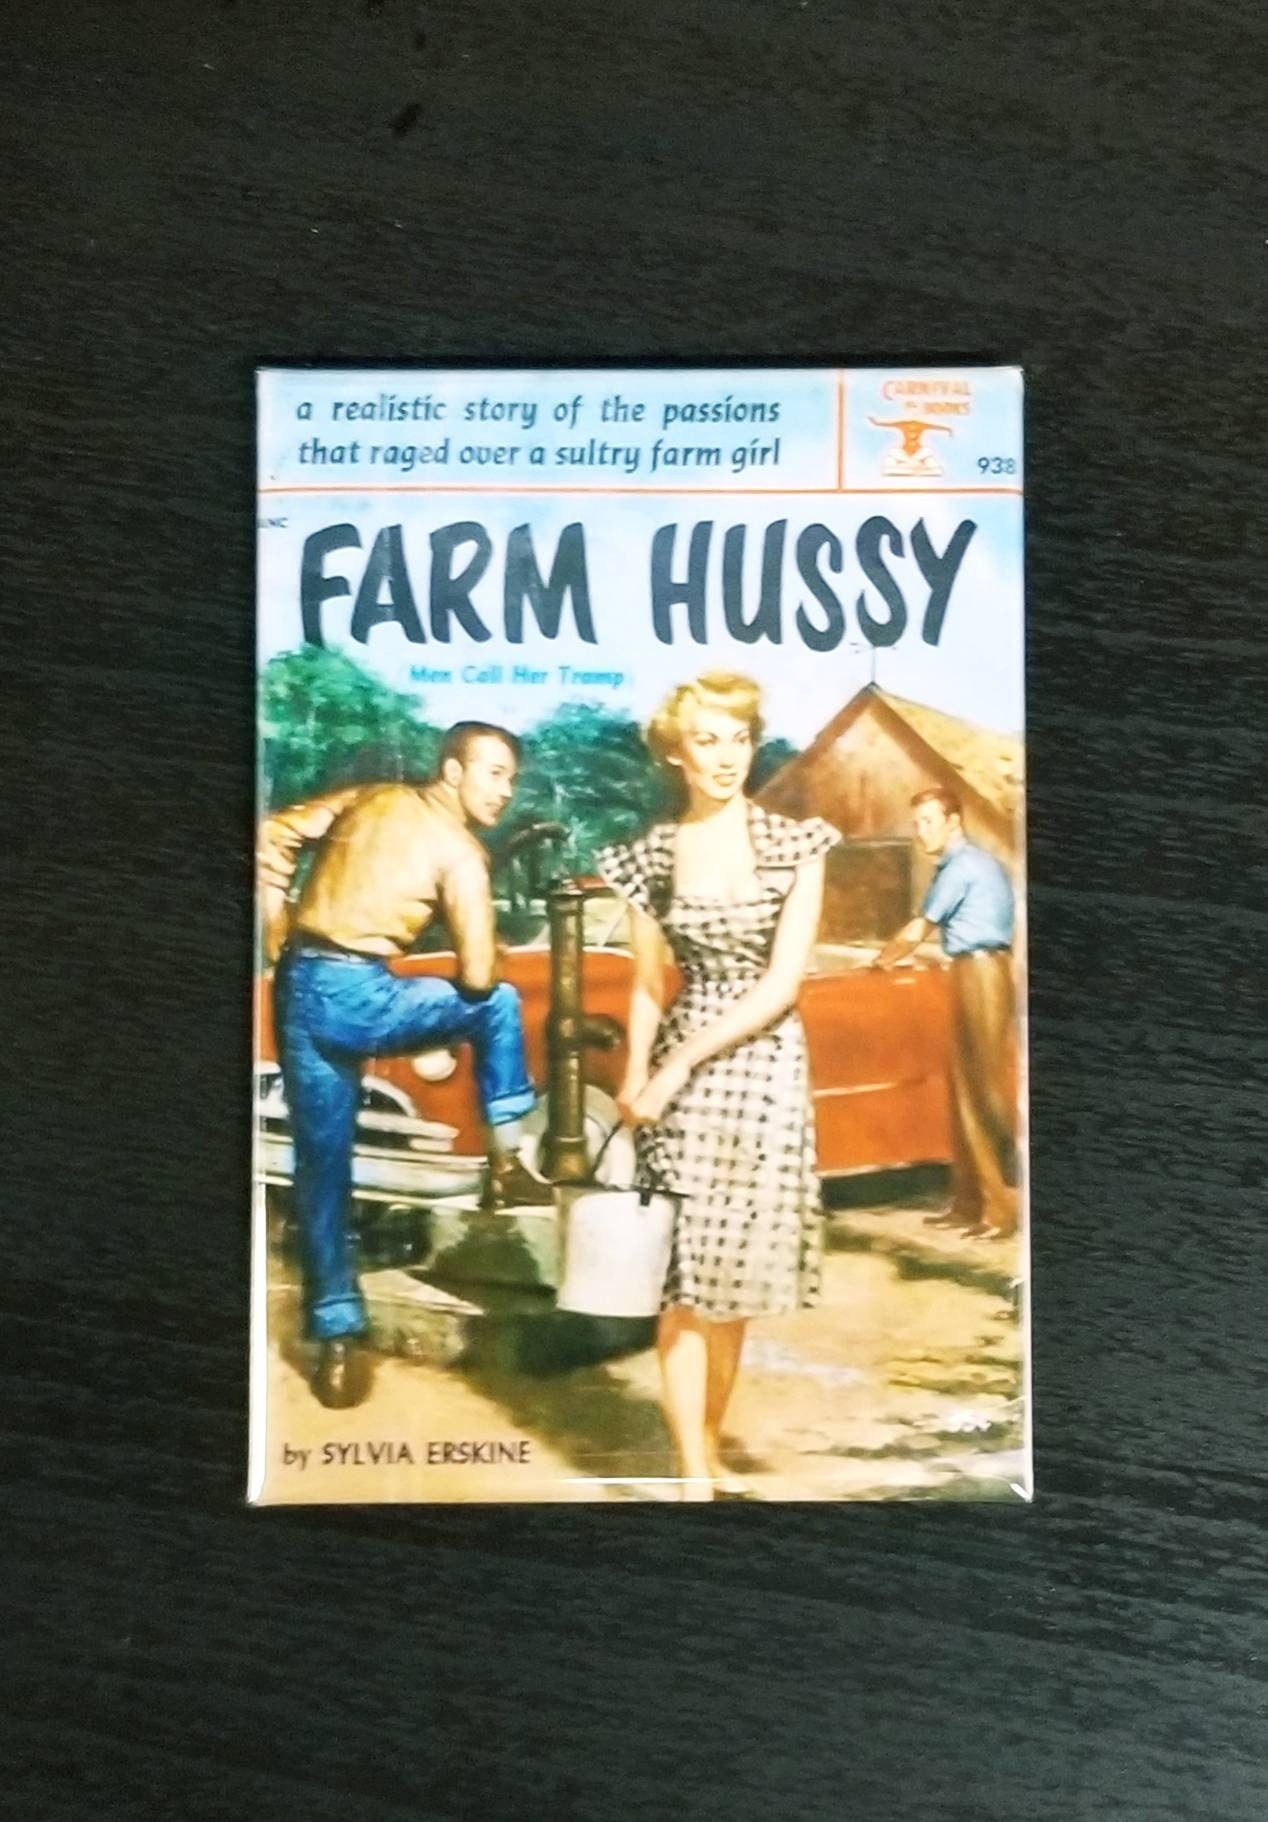 Farm Hussy vintage refrigerator magnet pulp adult fiction cover